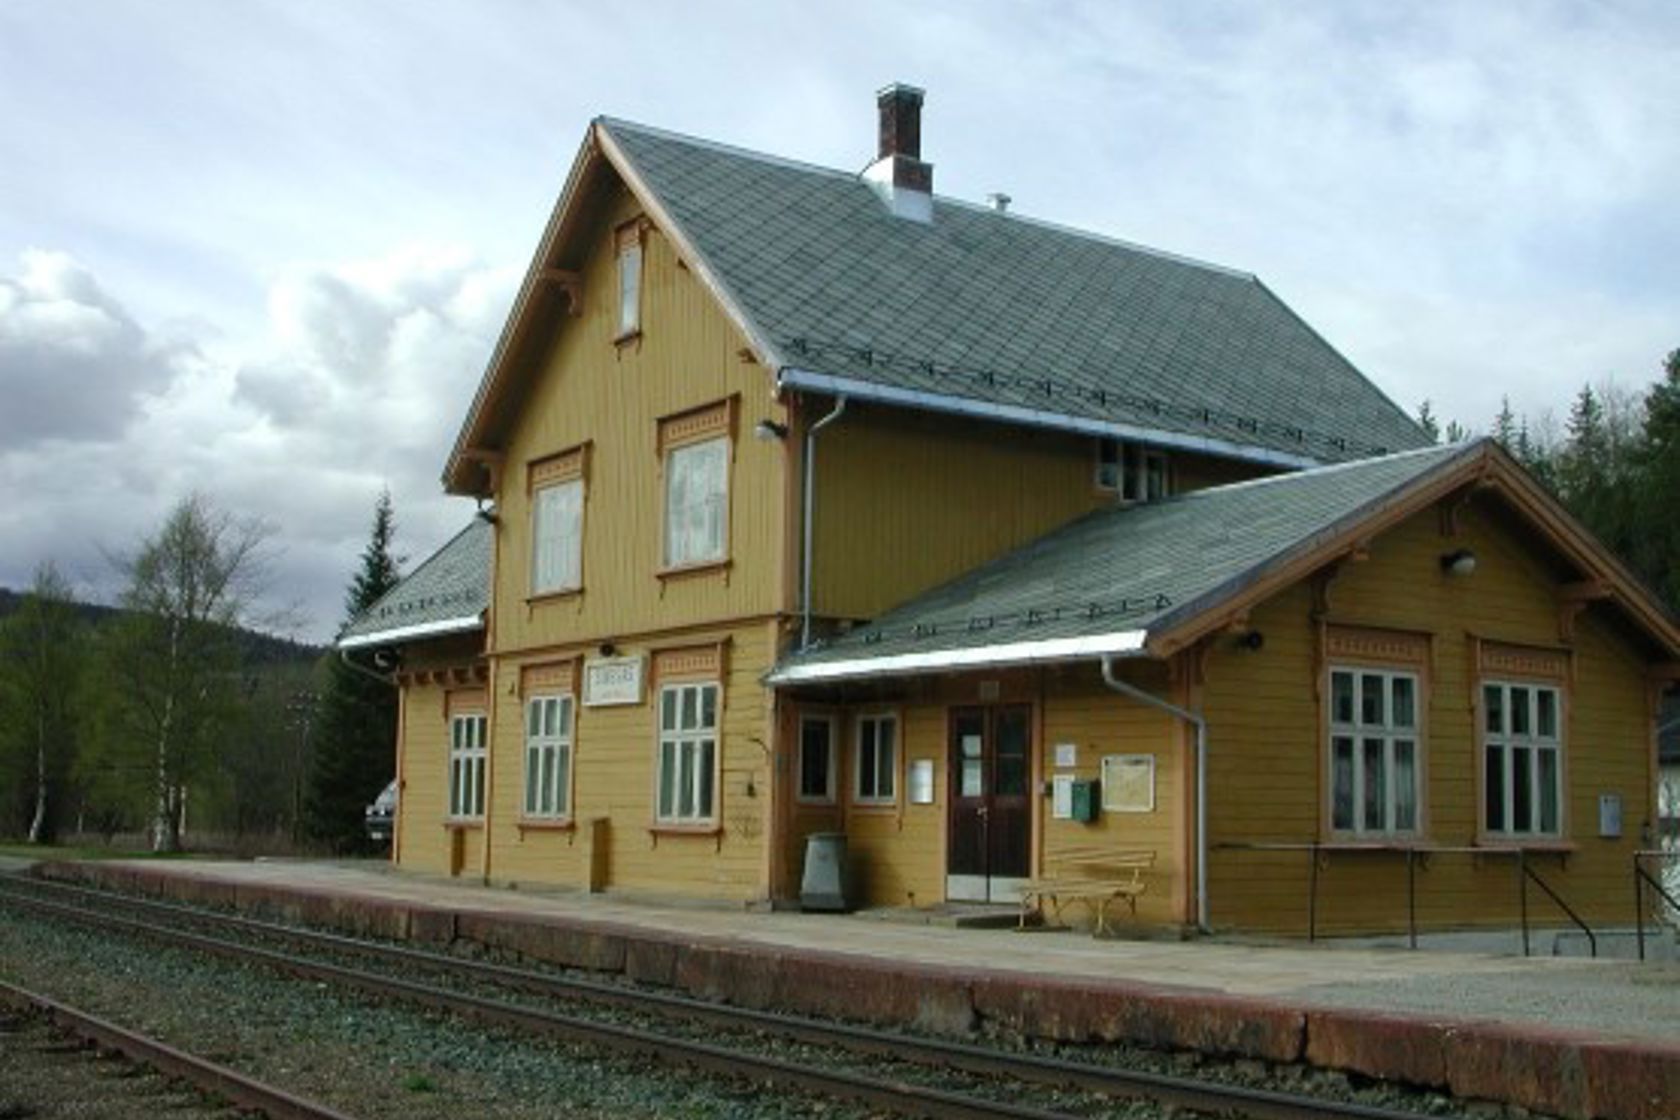 Exterior view of Singsås station